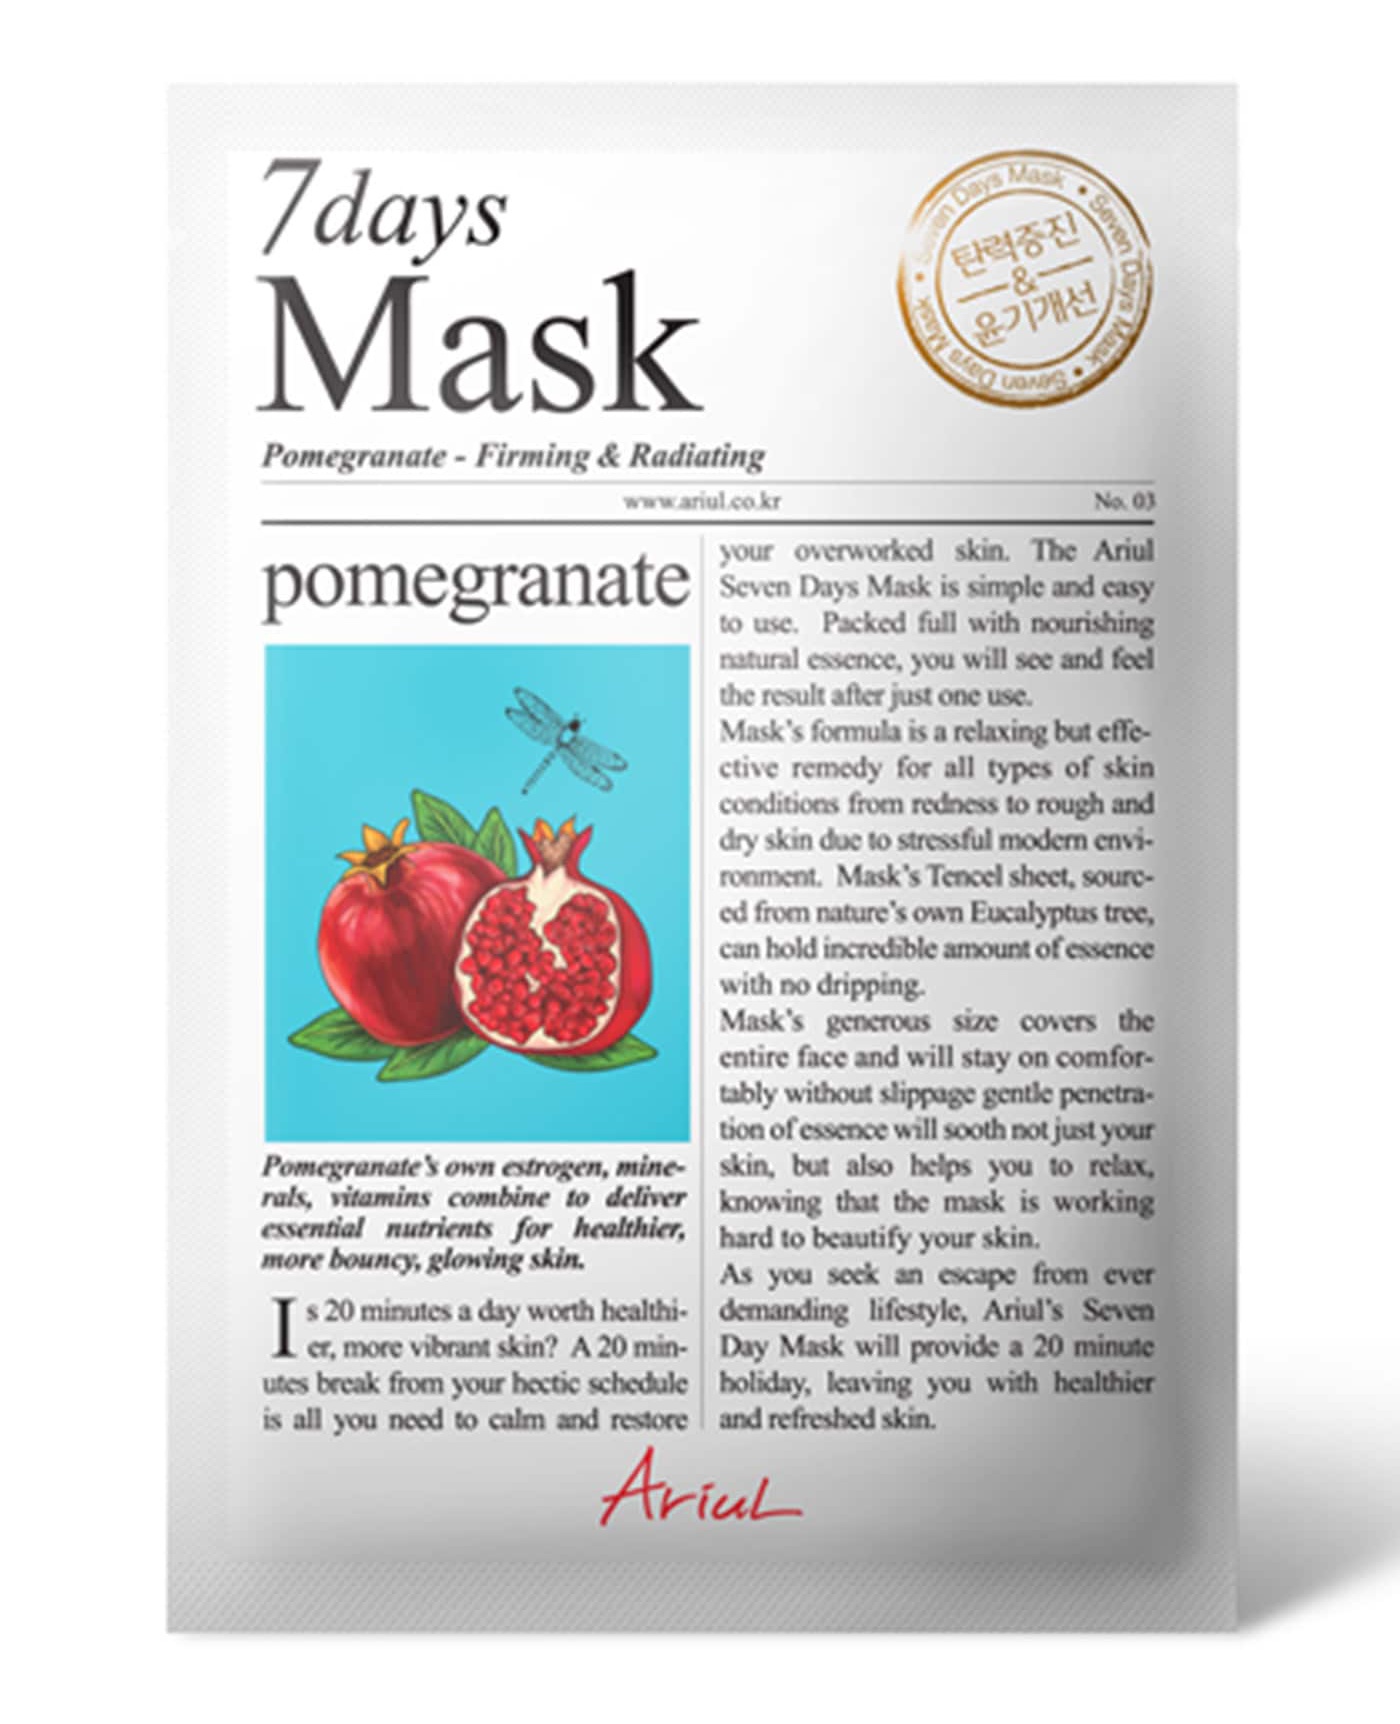 Ariul 7 Days Mask Pomegrante Firming & Radiating